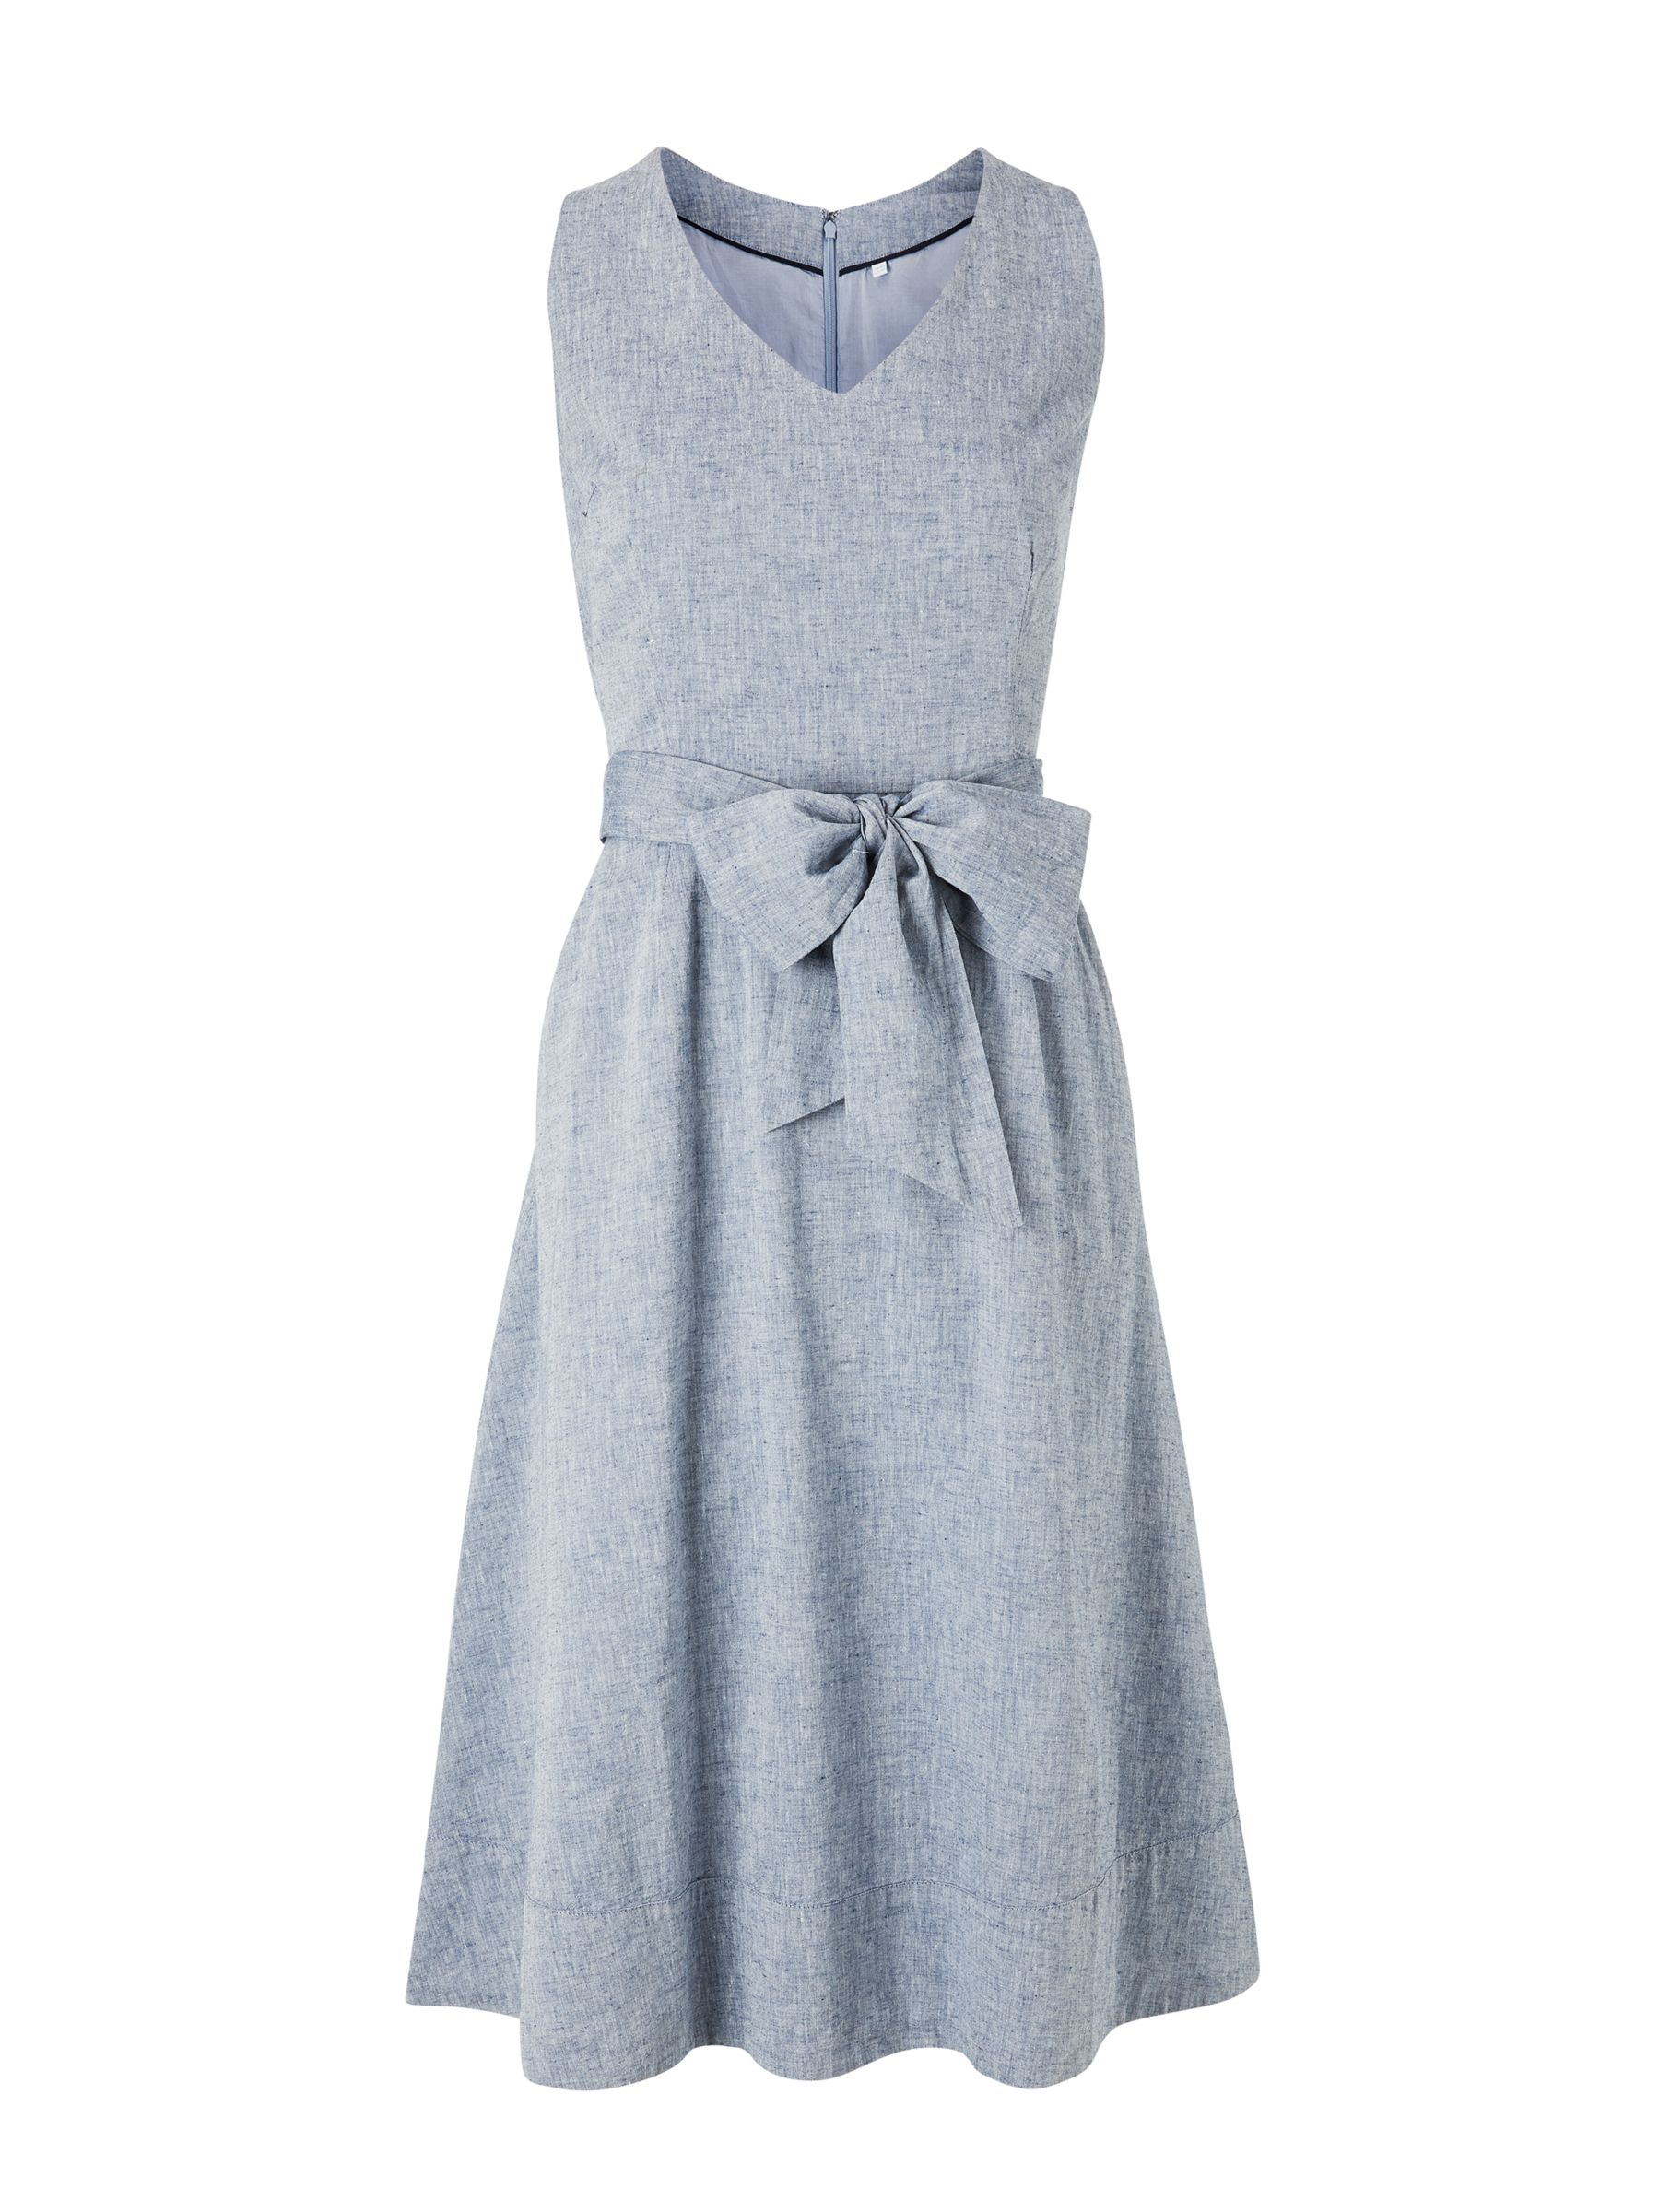 Boden Jade Dress | Chambray at John Lewis & Partners